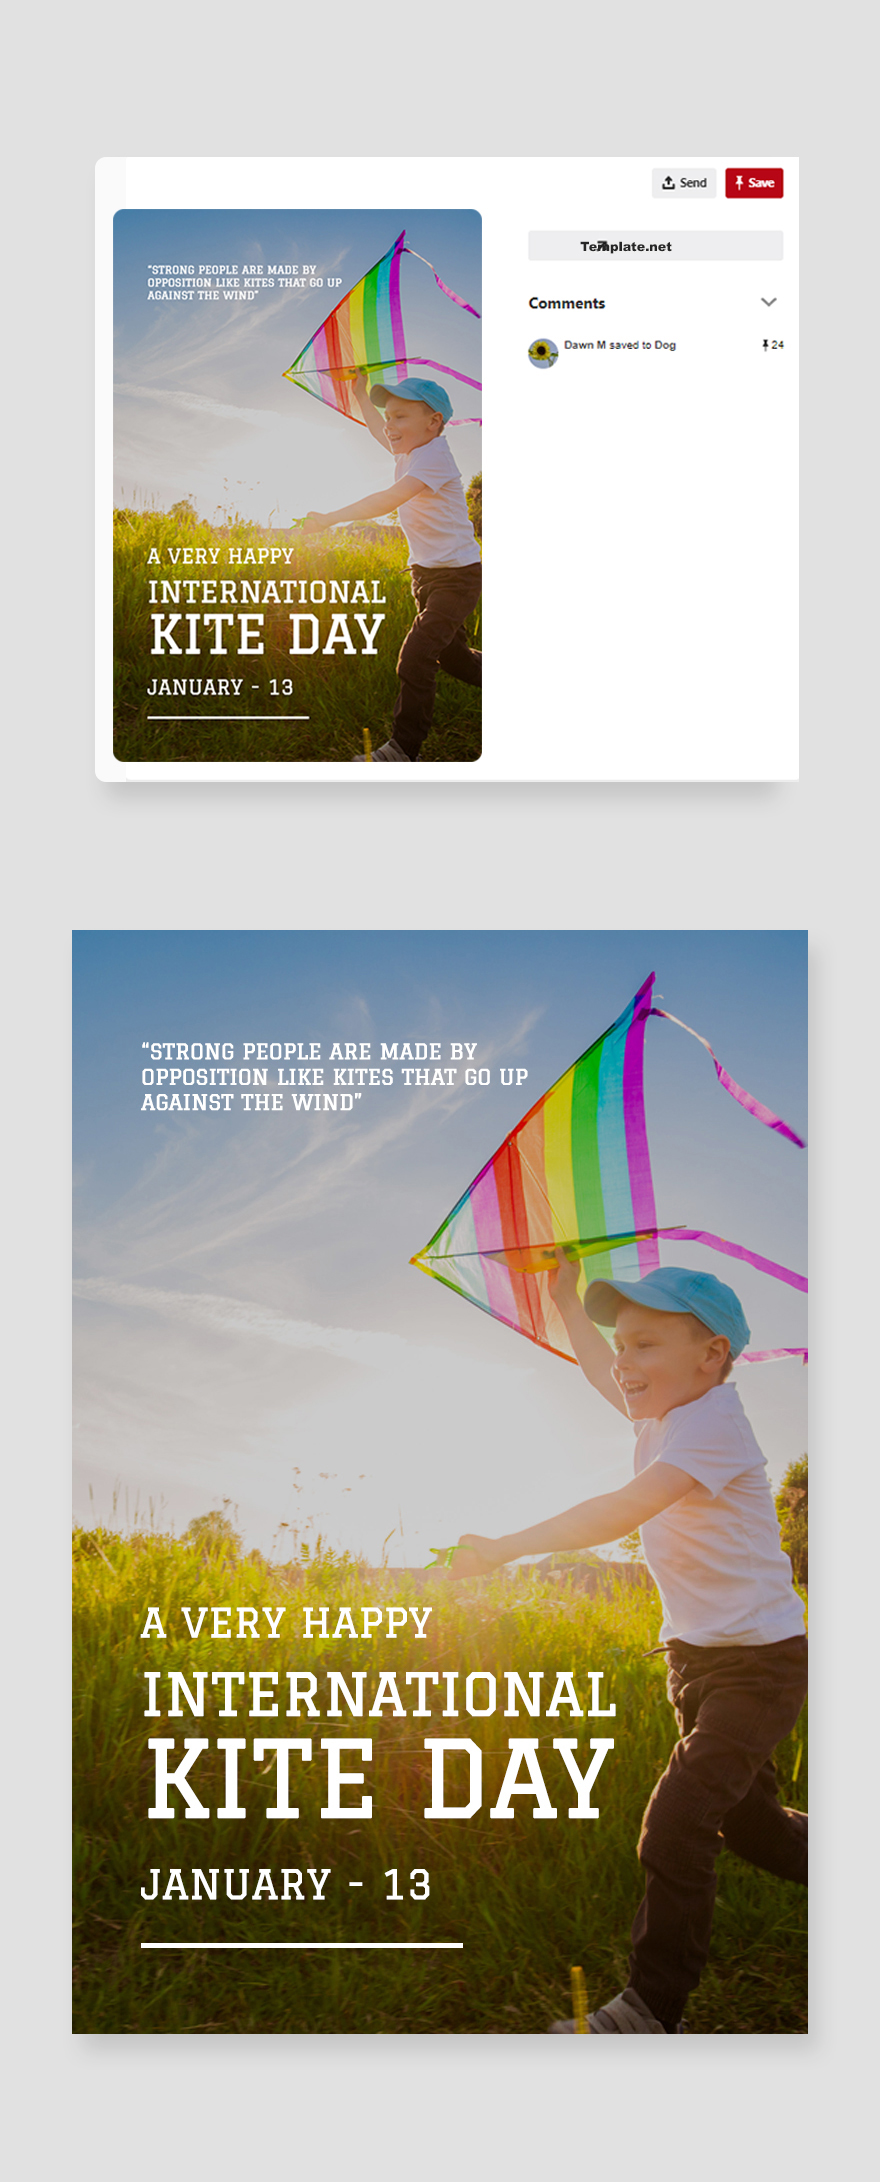 International Kites Day Pinterest Pin Template in PSD